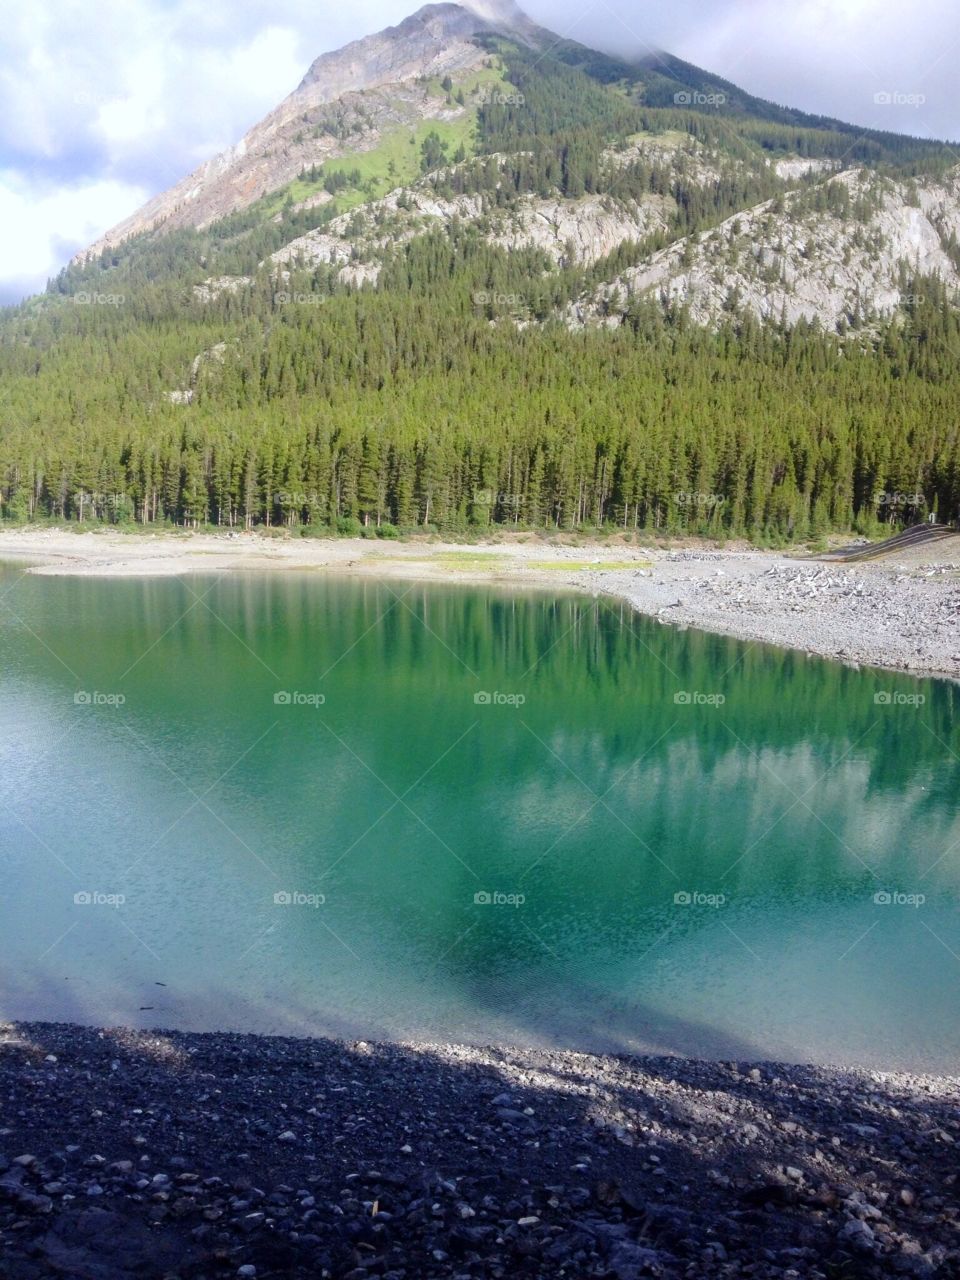 Reflection lake